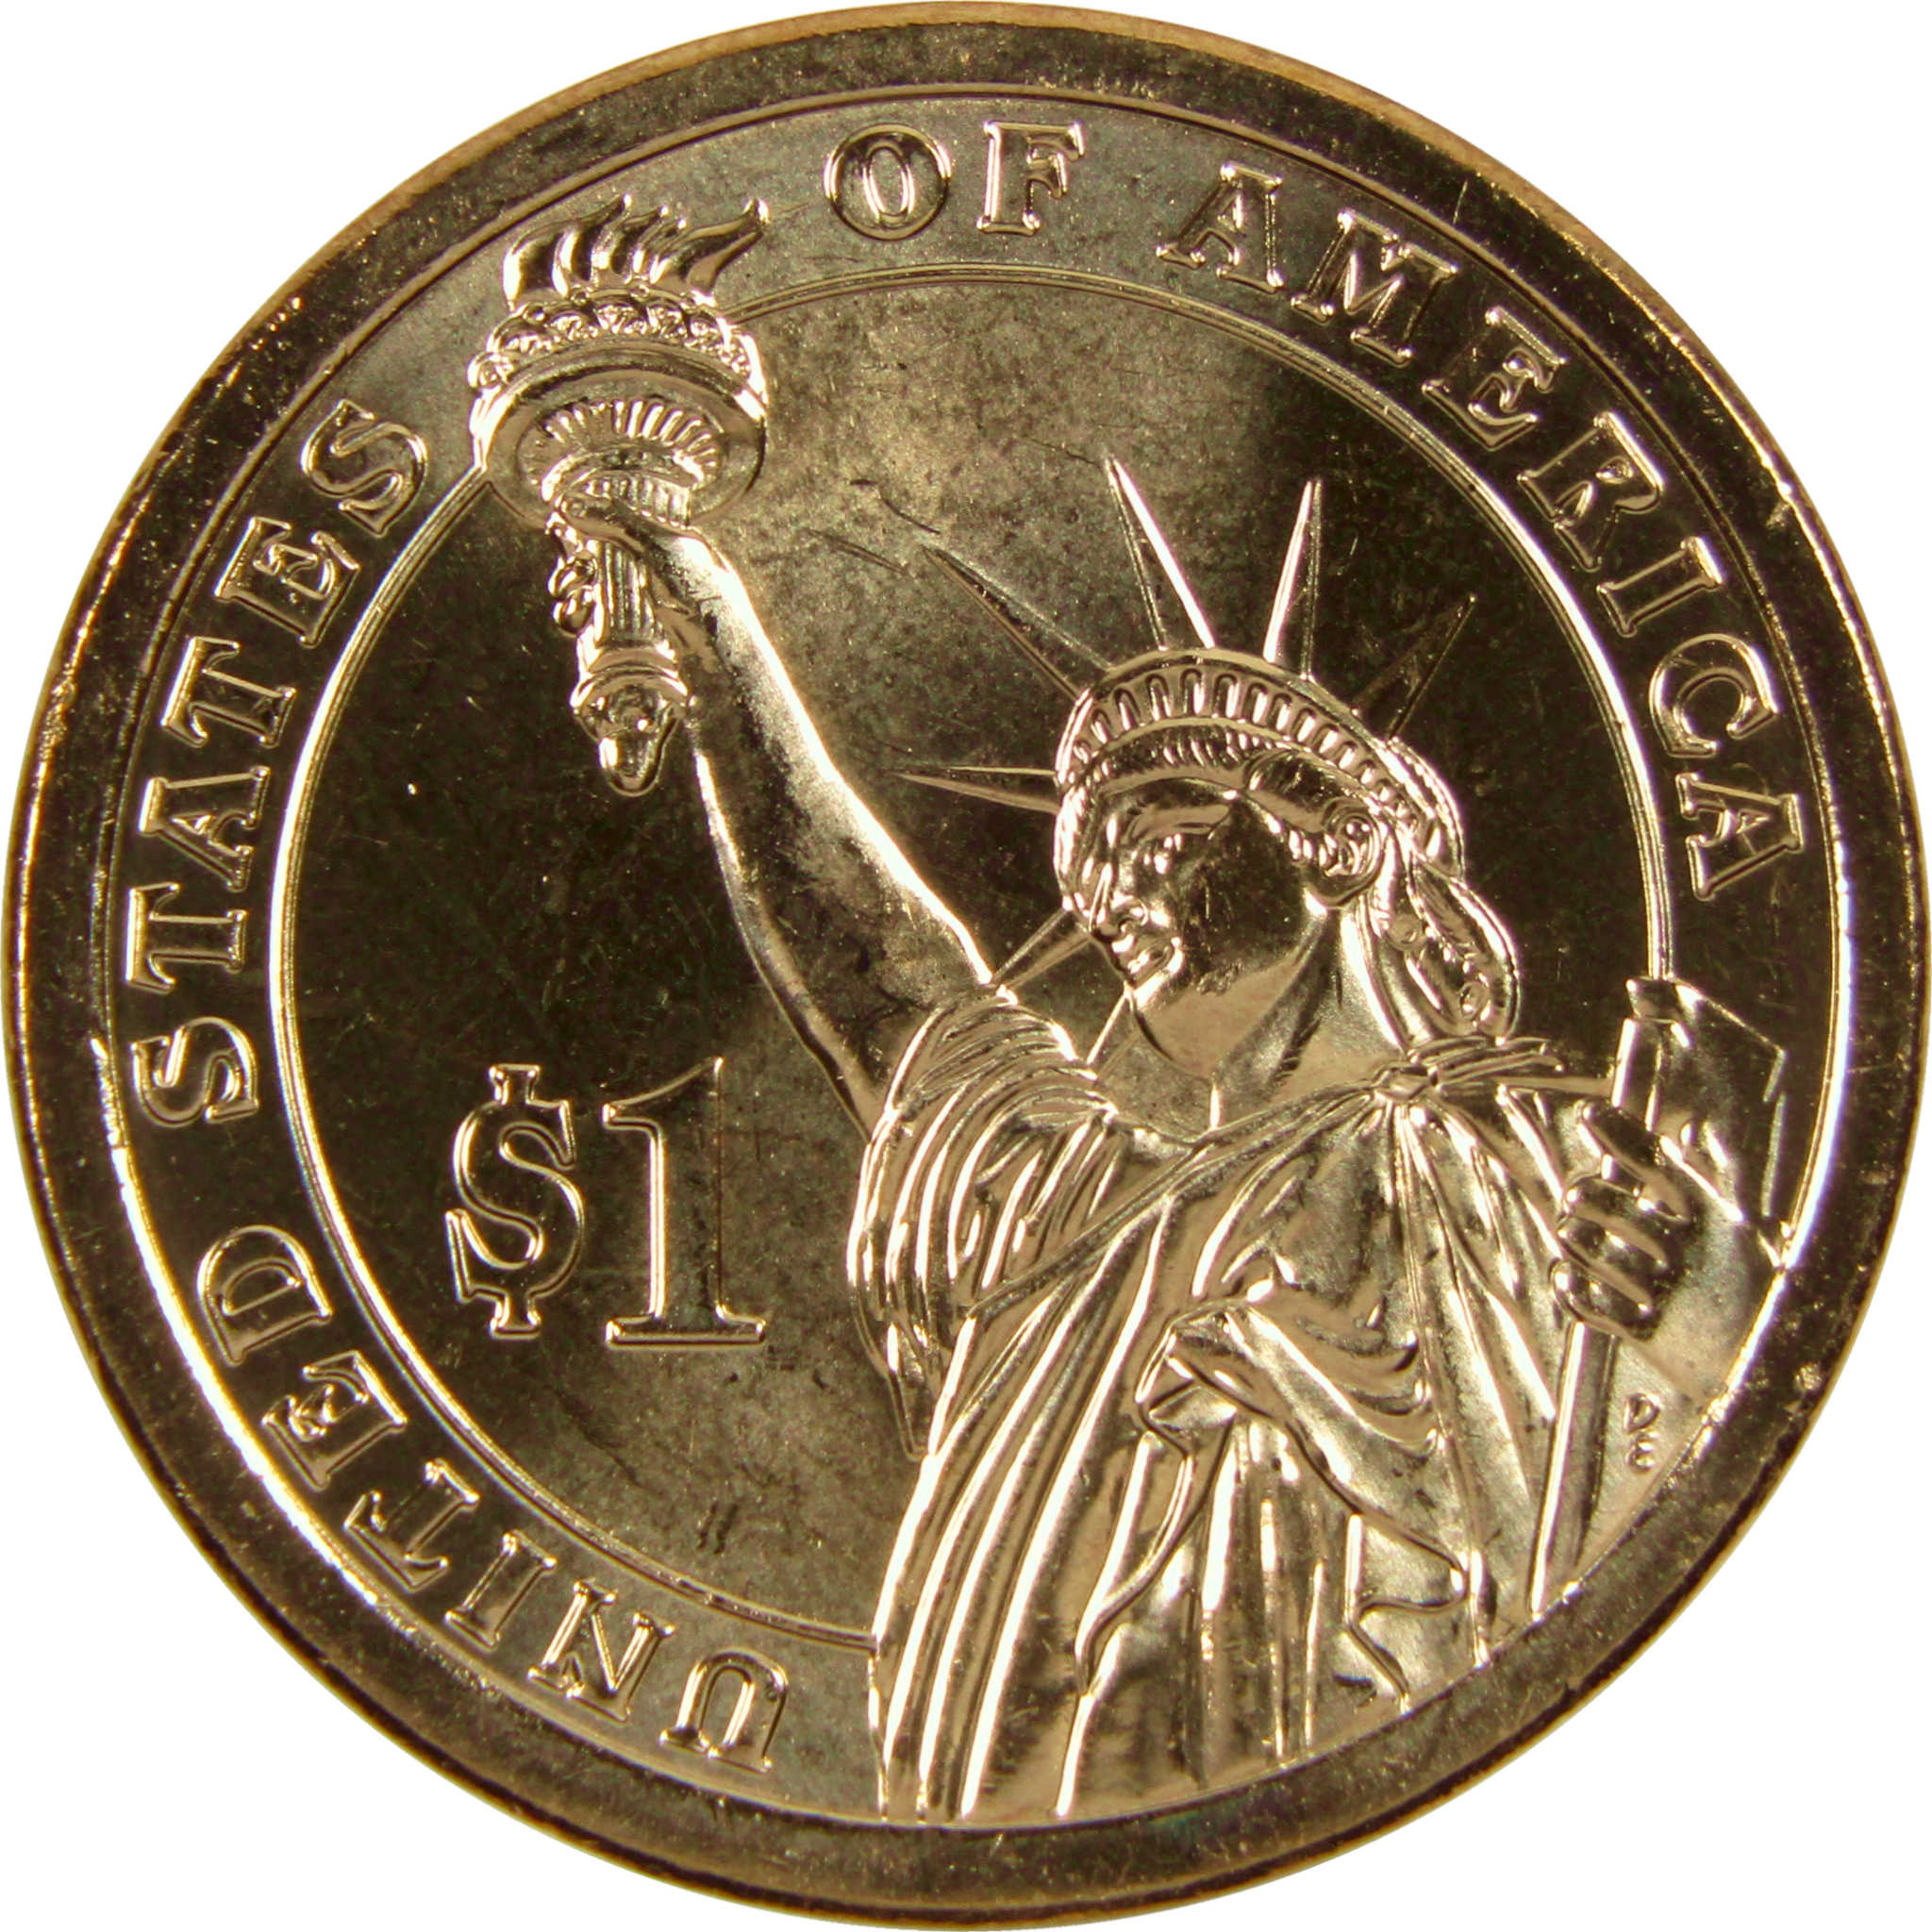 2010 D Millard Fillmore Presidential Dollar BU Uncirculated $1 Coin